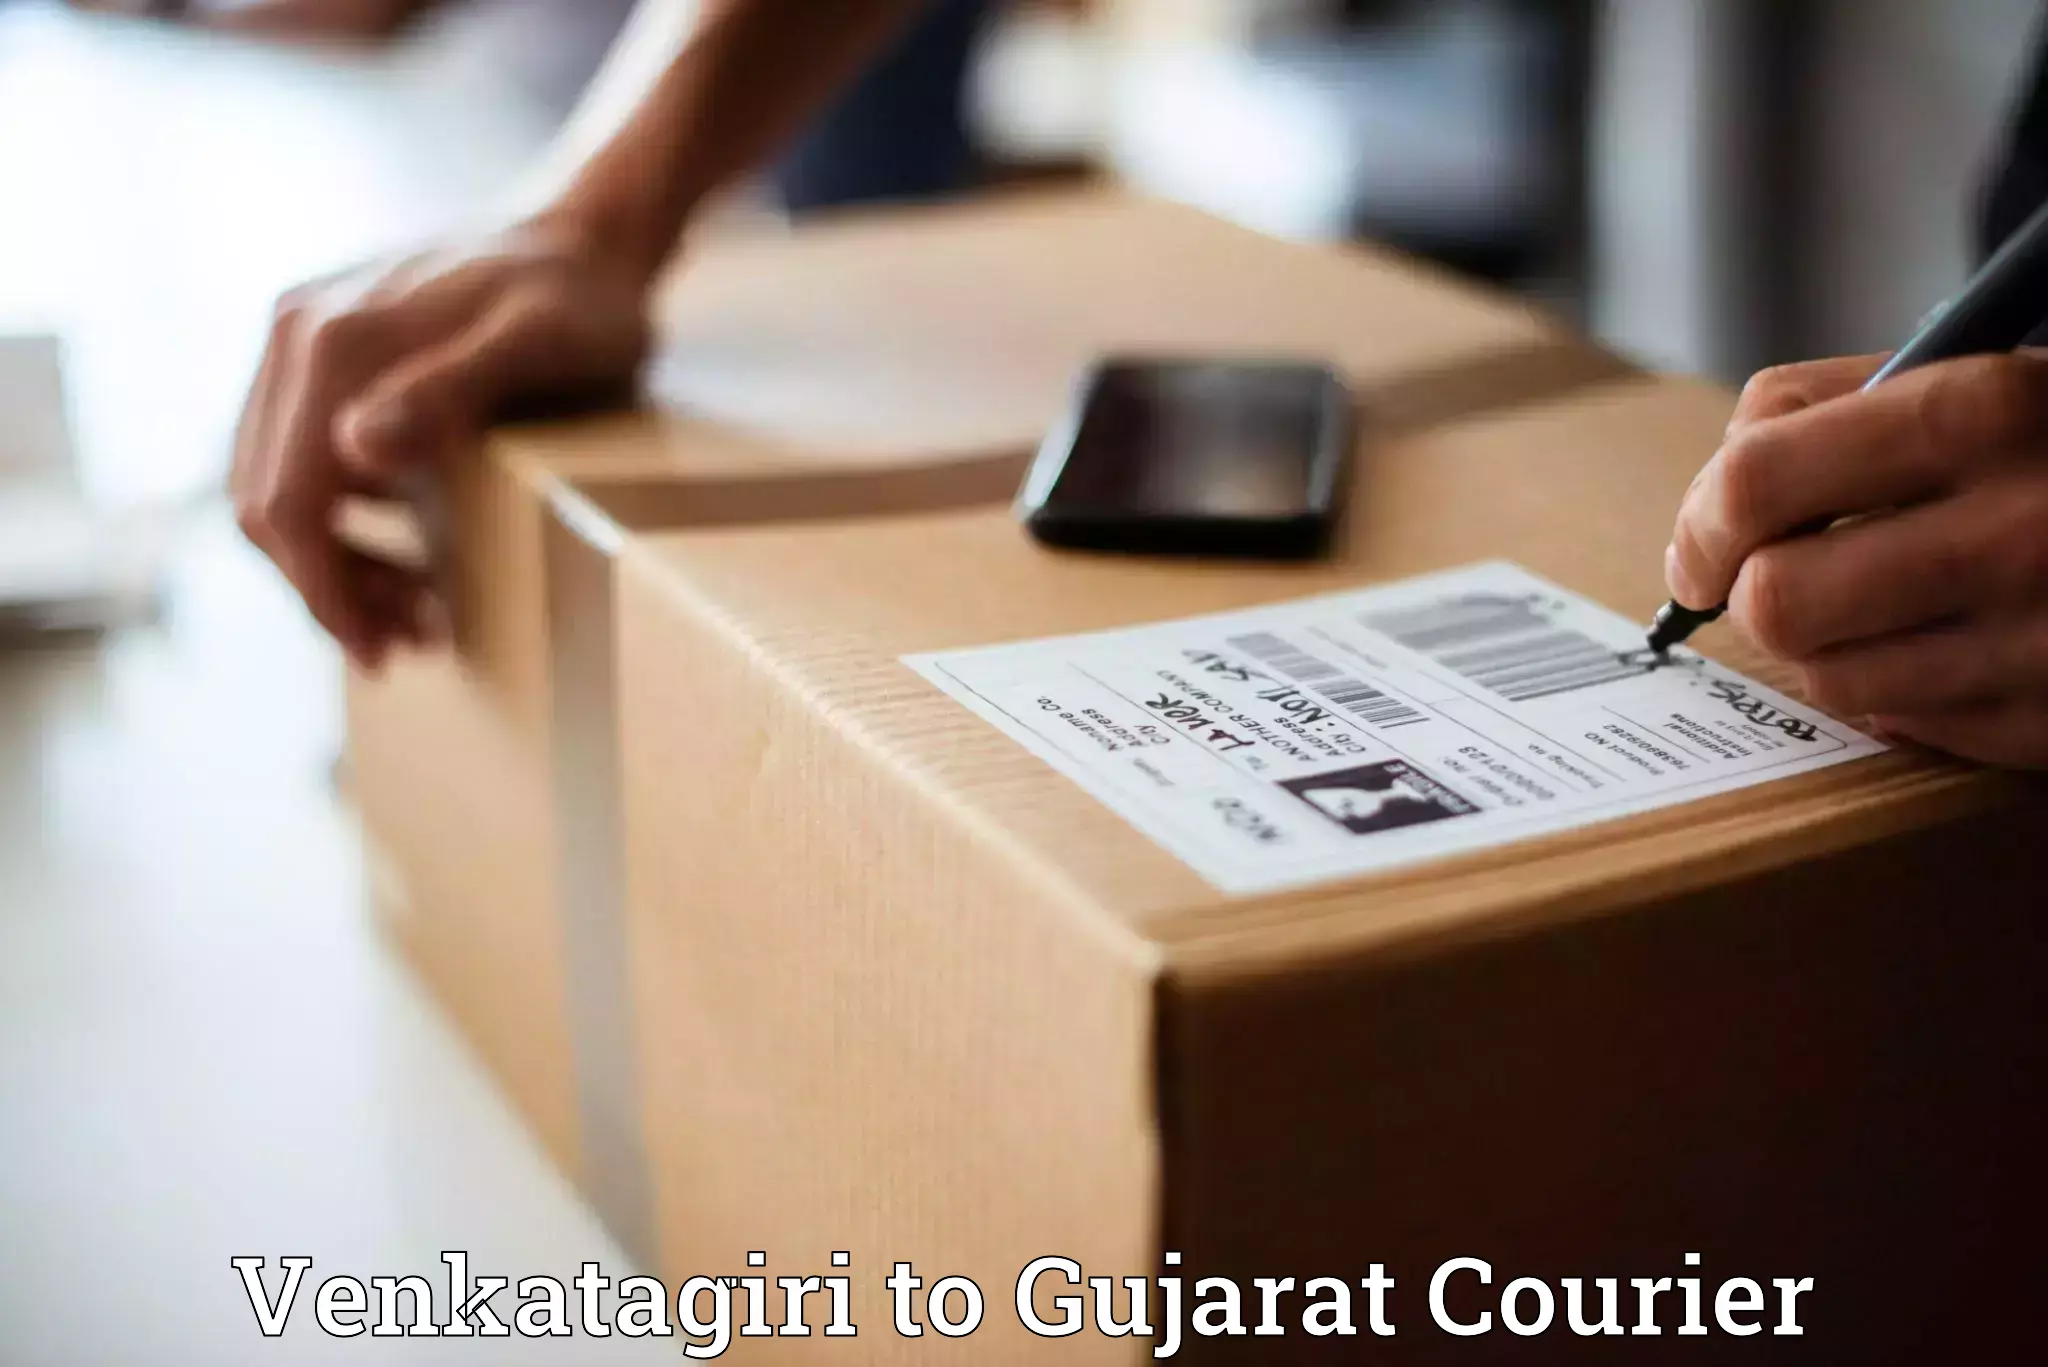 Express delivery network Venkatagiri to Patan Gujarat